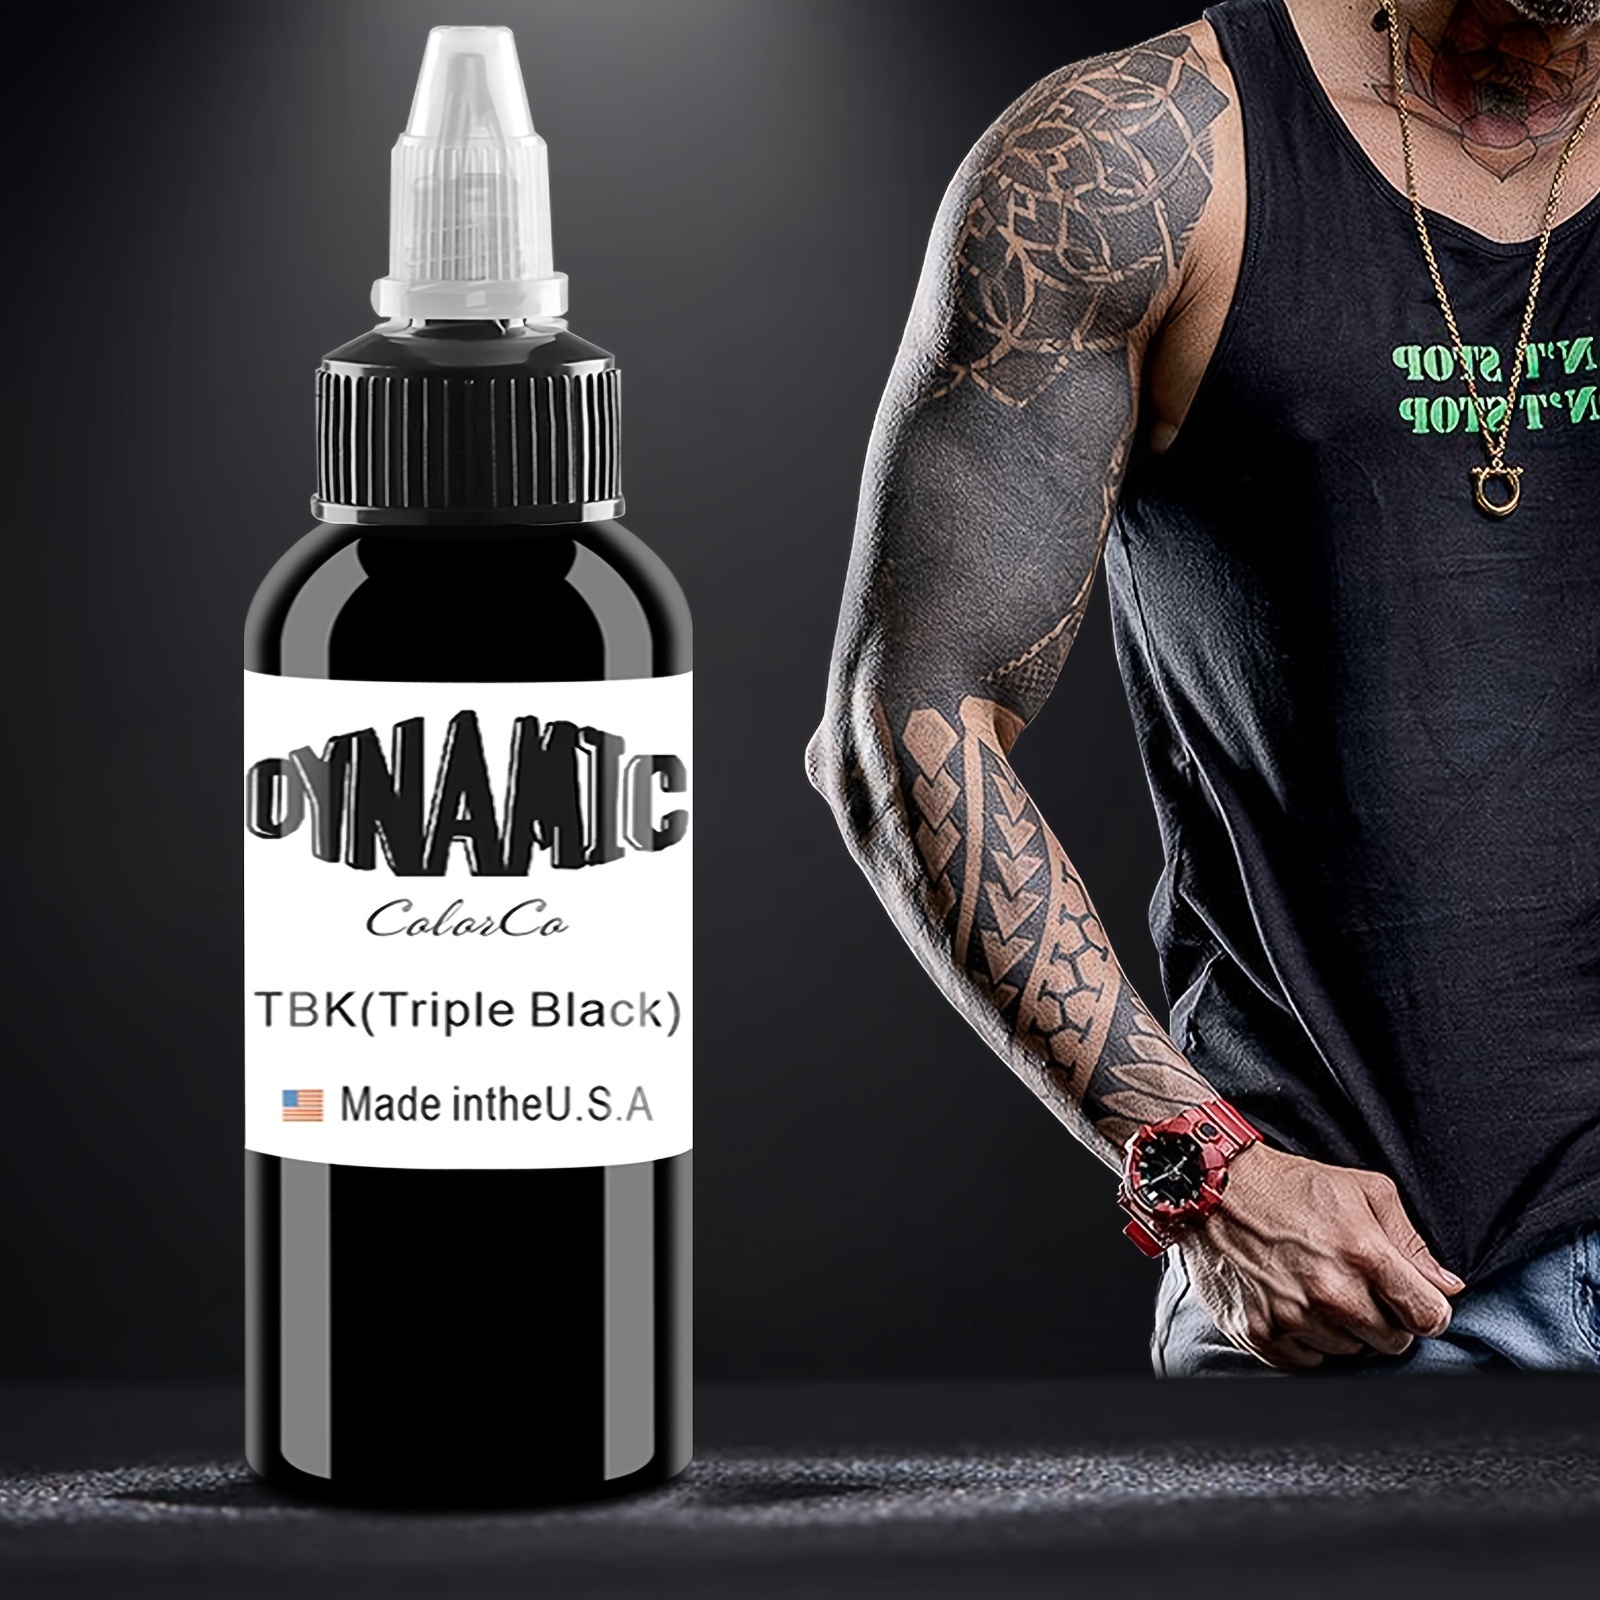  Dynamic Black Ink 8oz Bottle : Beauty & Personal Care